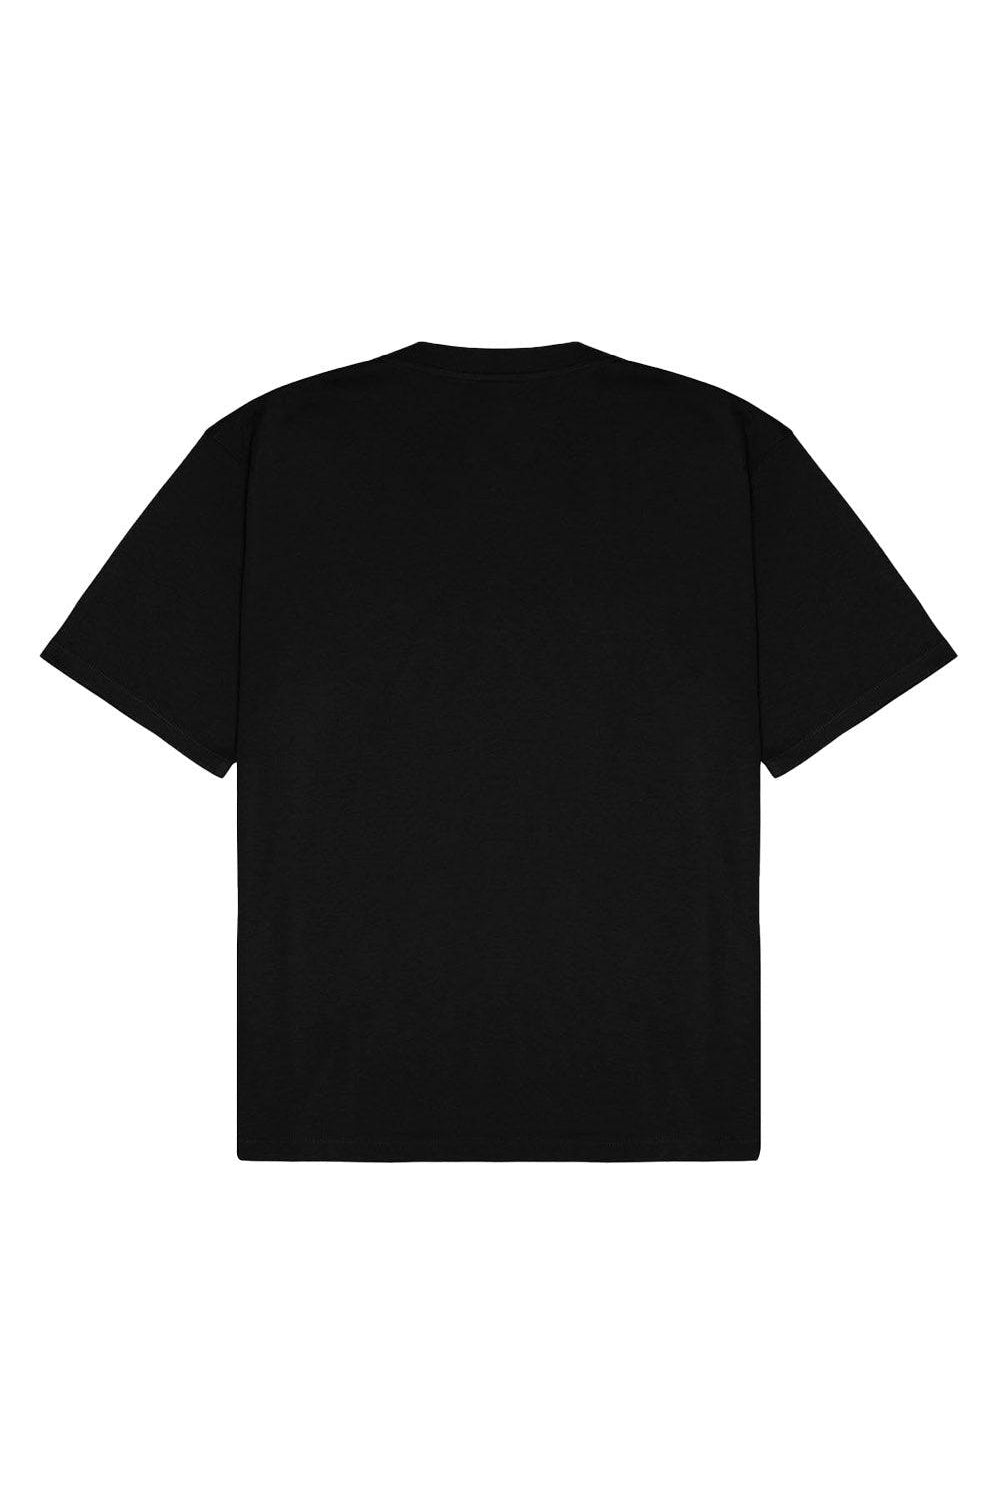 WWF Market | Mercan Yılanı T-shirt - Siyah 5 | Milagron